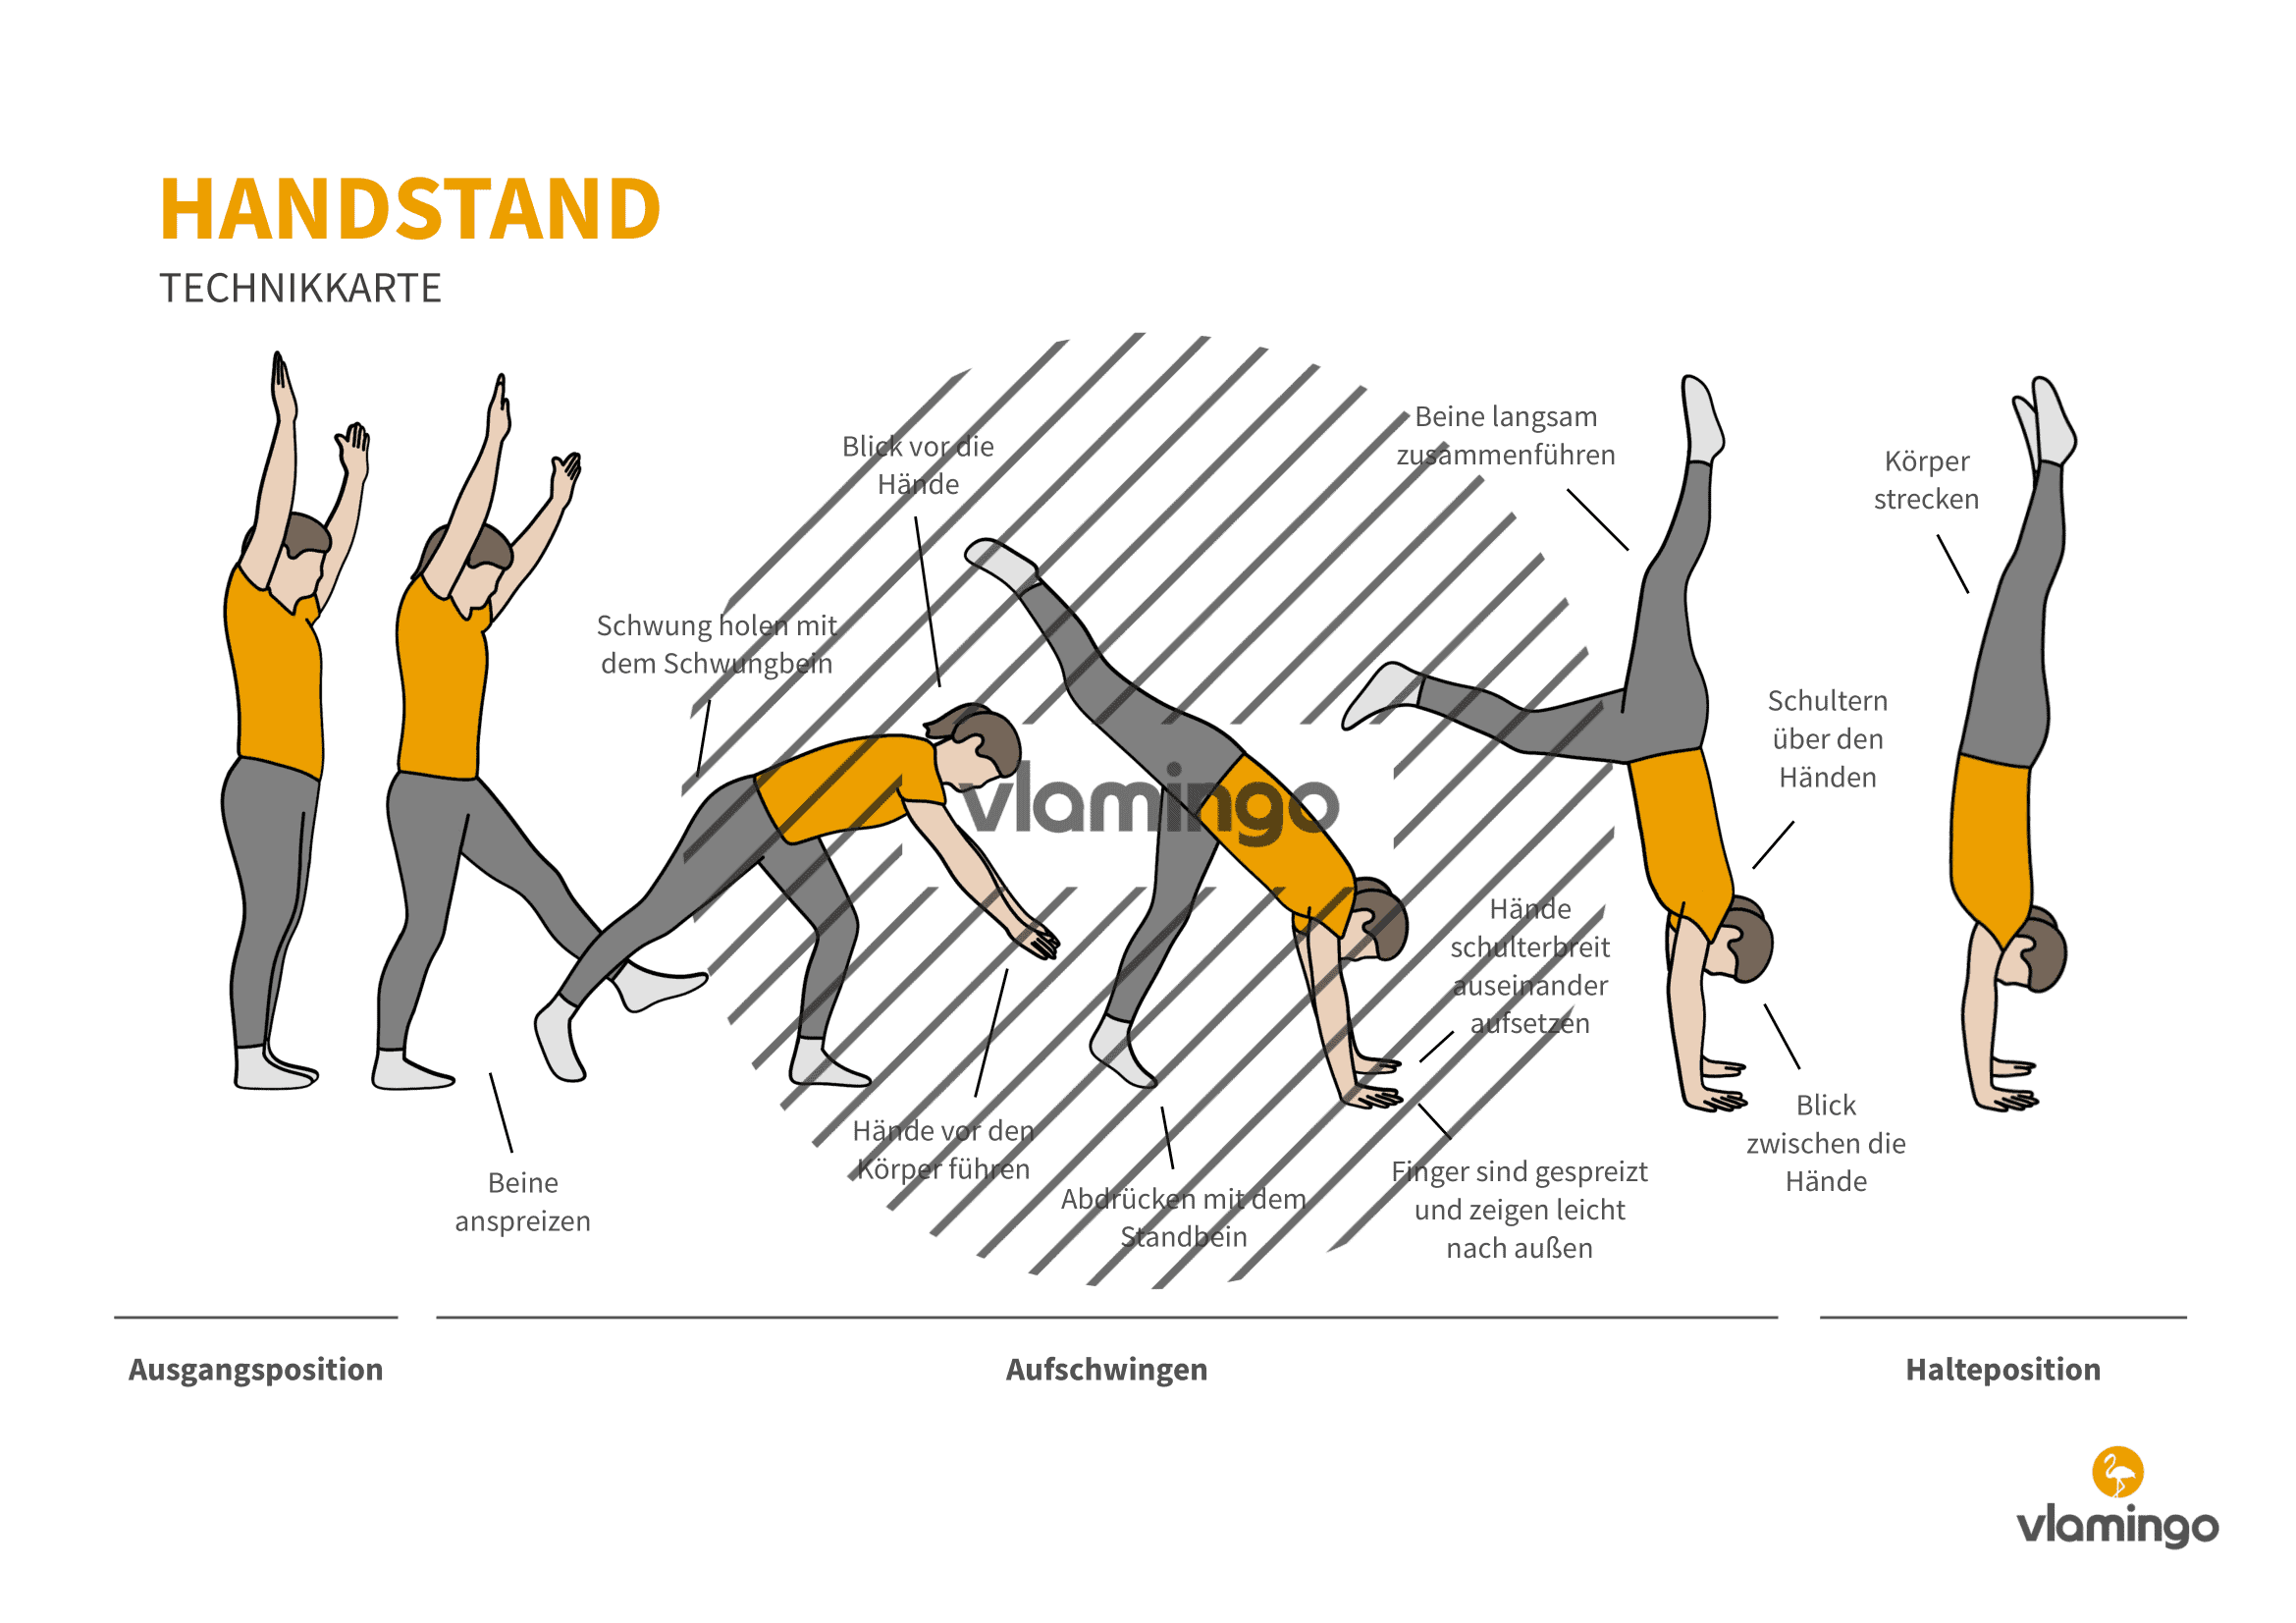 Handstand - Technikkarte - Bewegungsanalyse